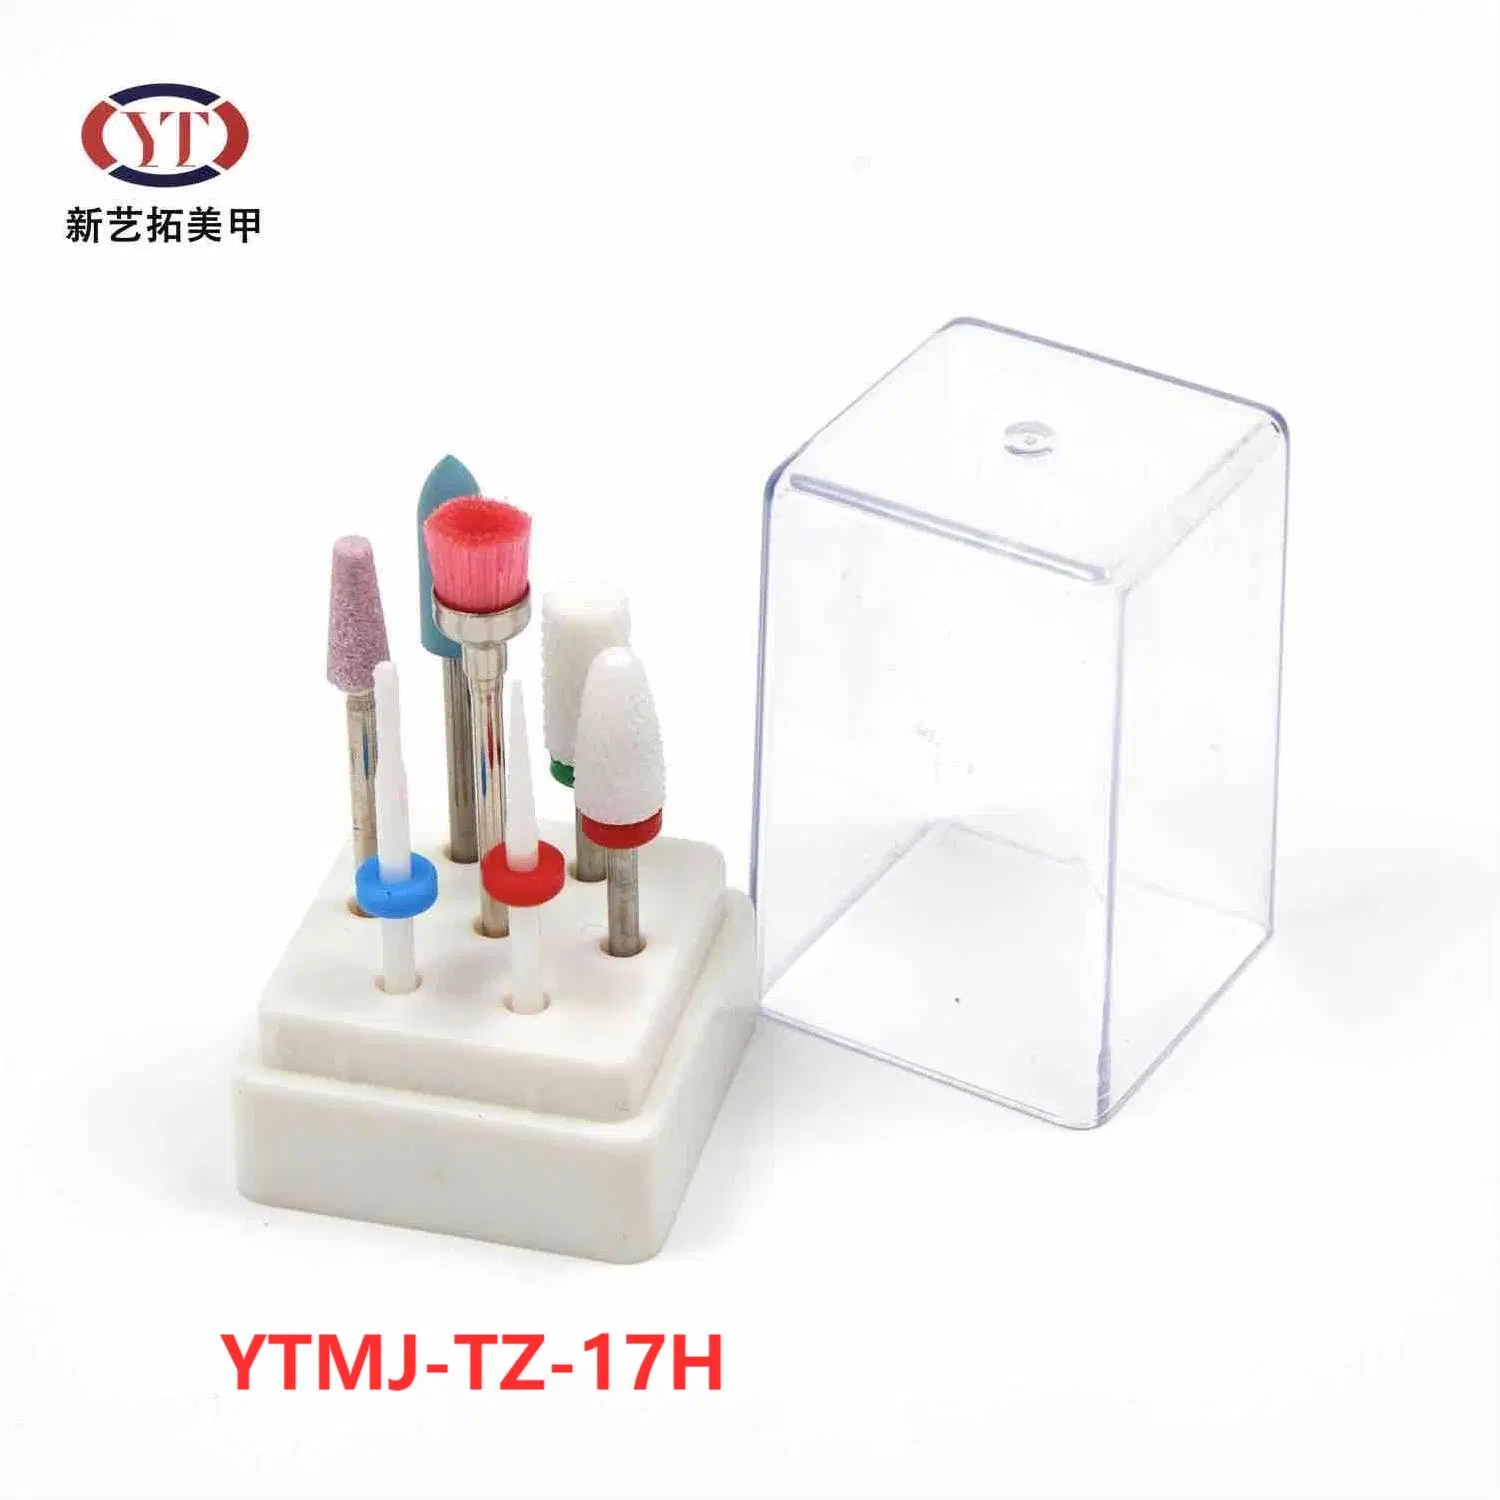 Ytmj-Tz-17h 7PCS Tungsten Carbide Ceramic Nail Drill Bits Set Electric Manicure Pedicure Burr File Drills Grinding Bit